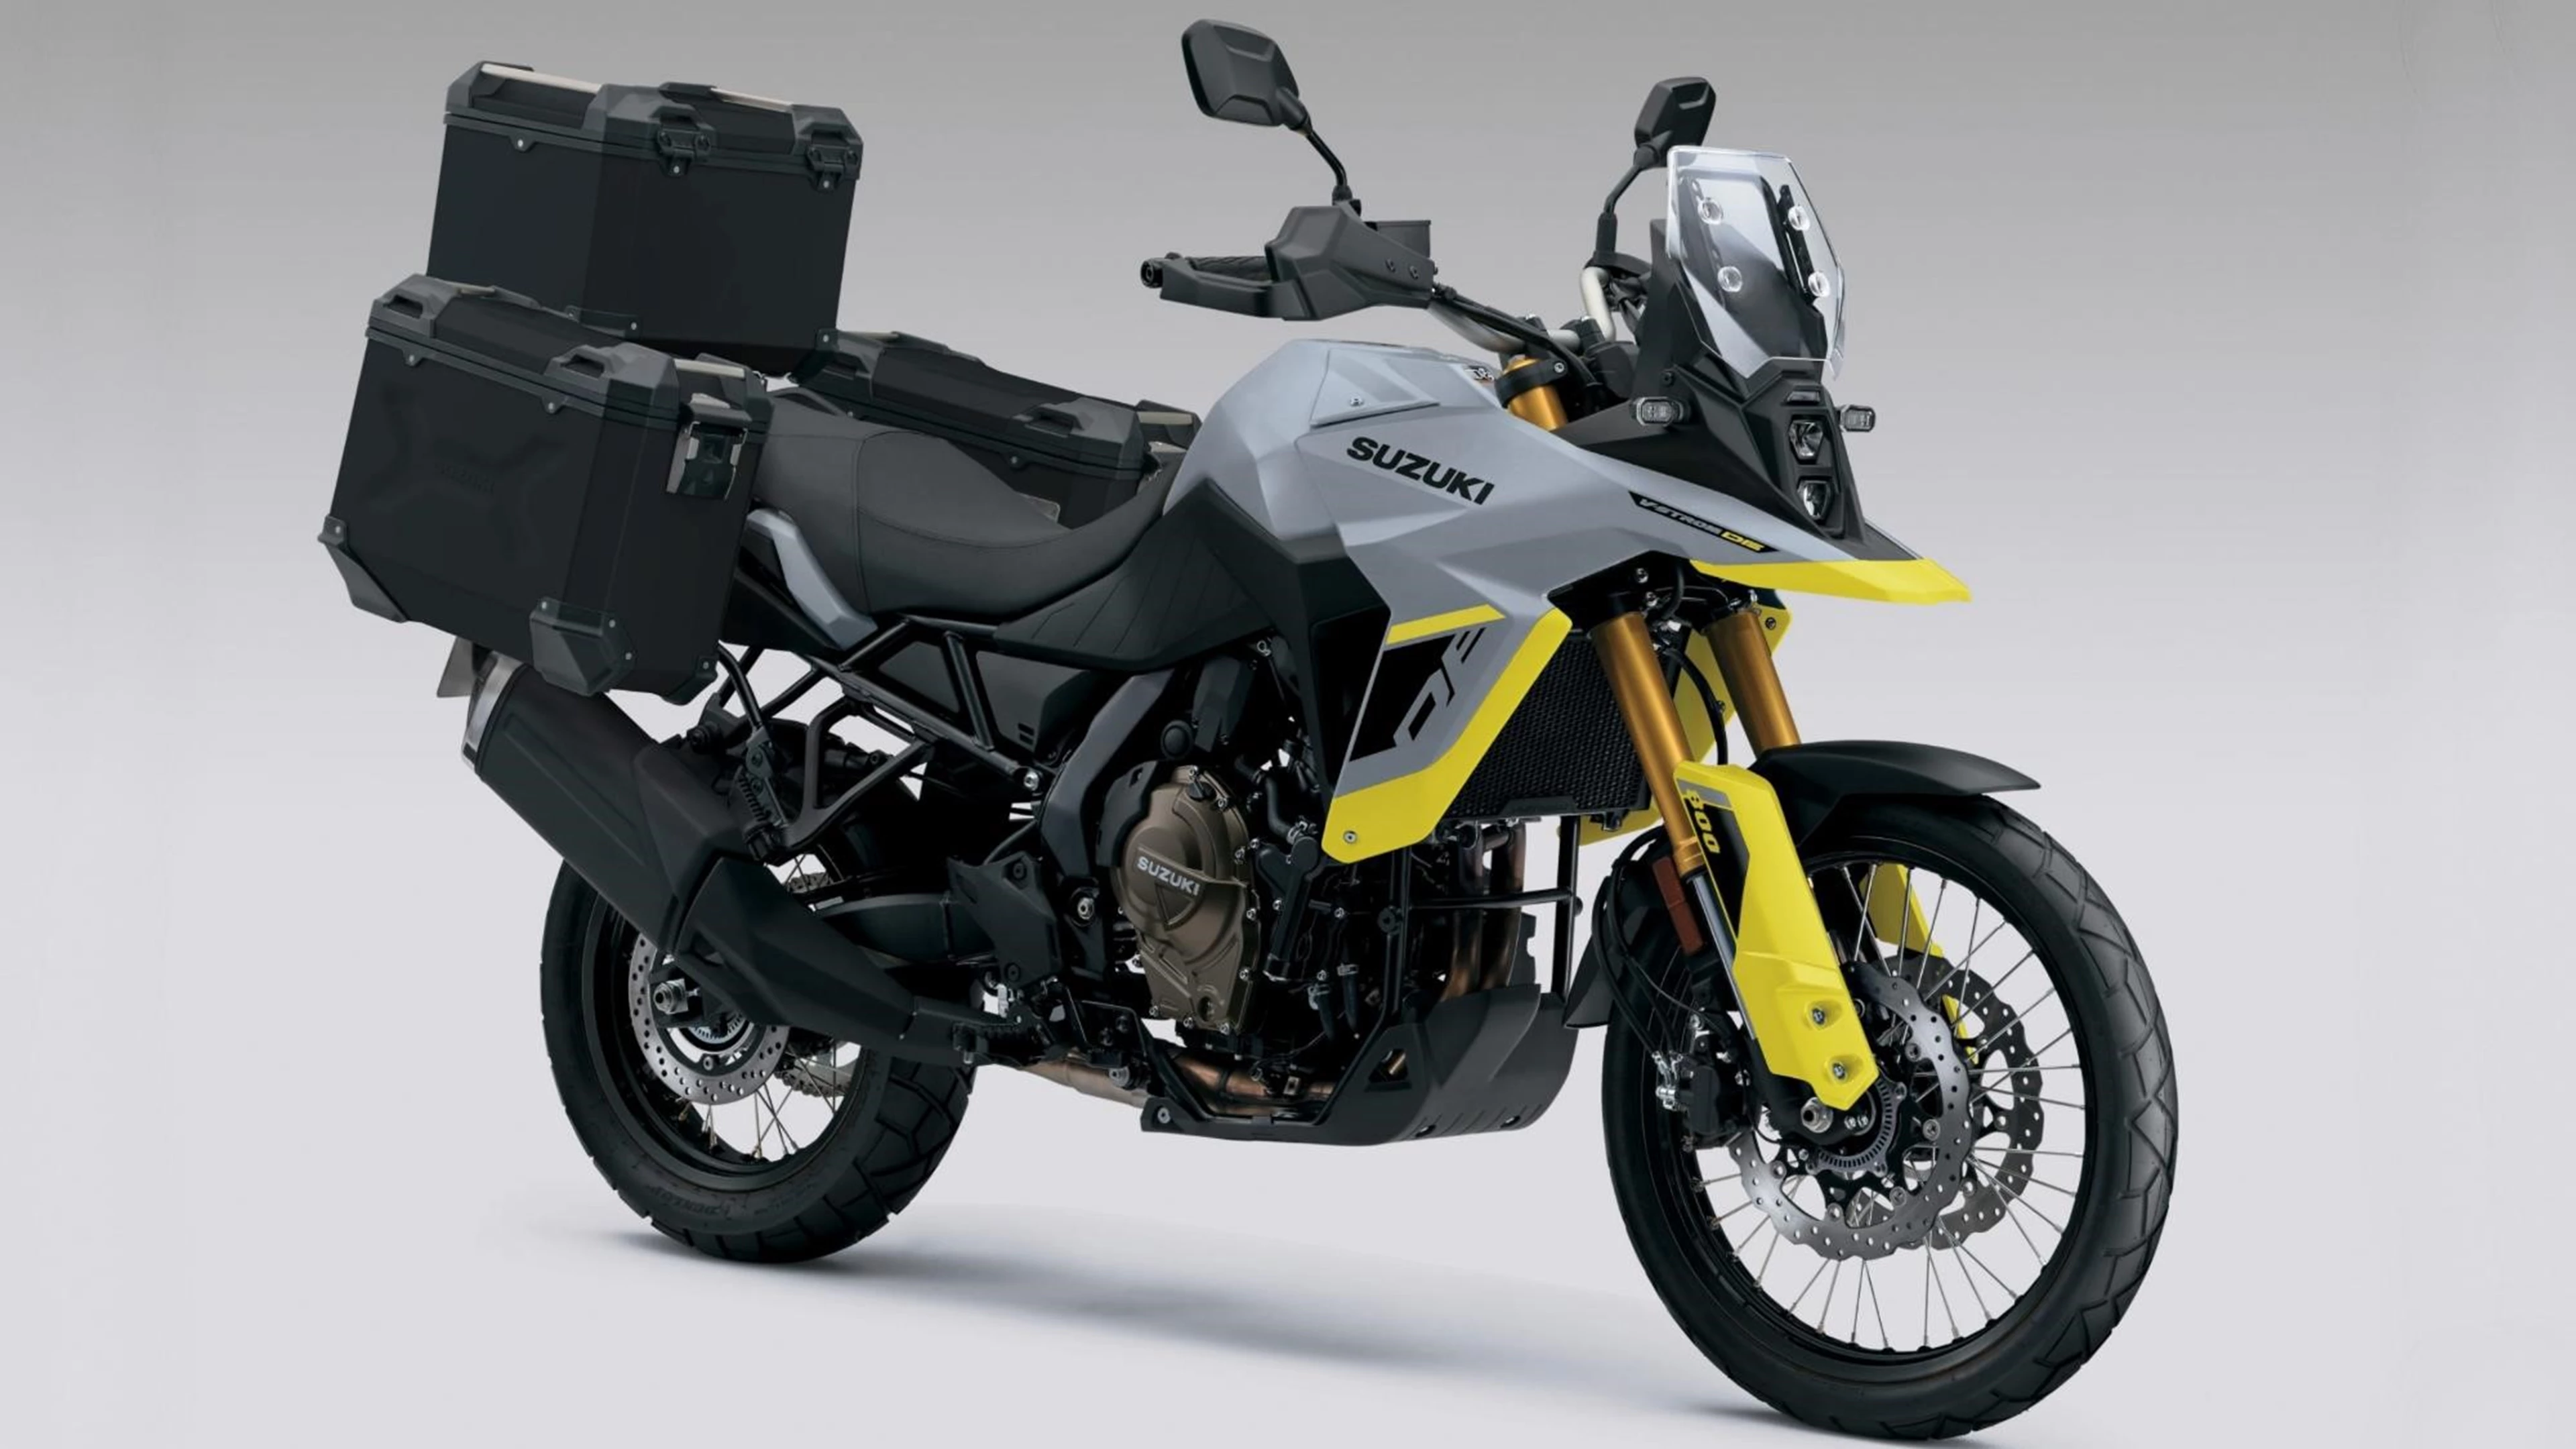 Suzuki V-Strom 800DE Adventure Bike with Luggage